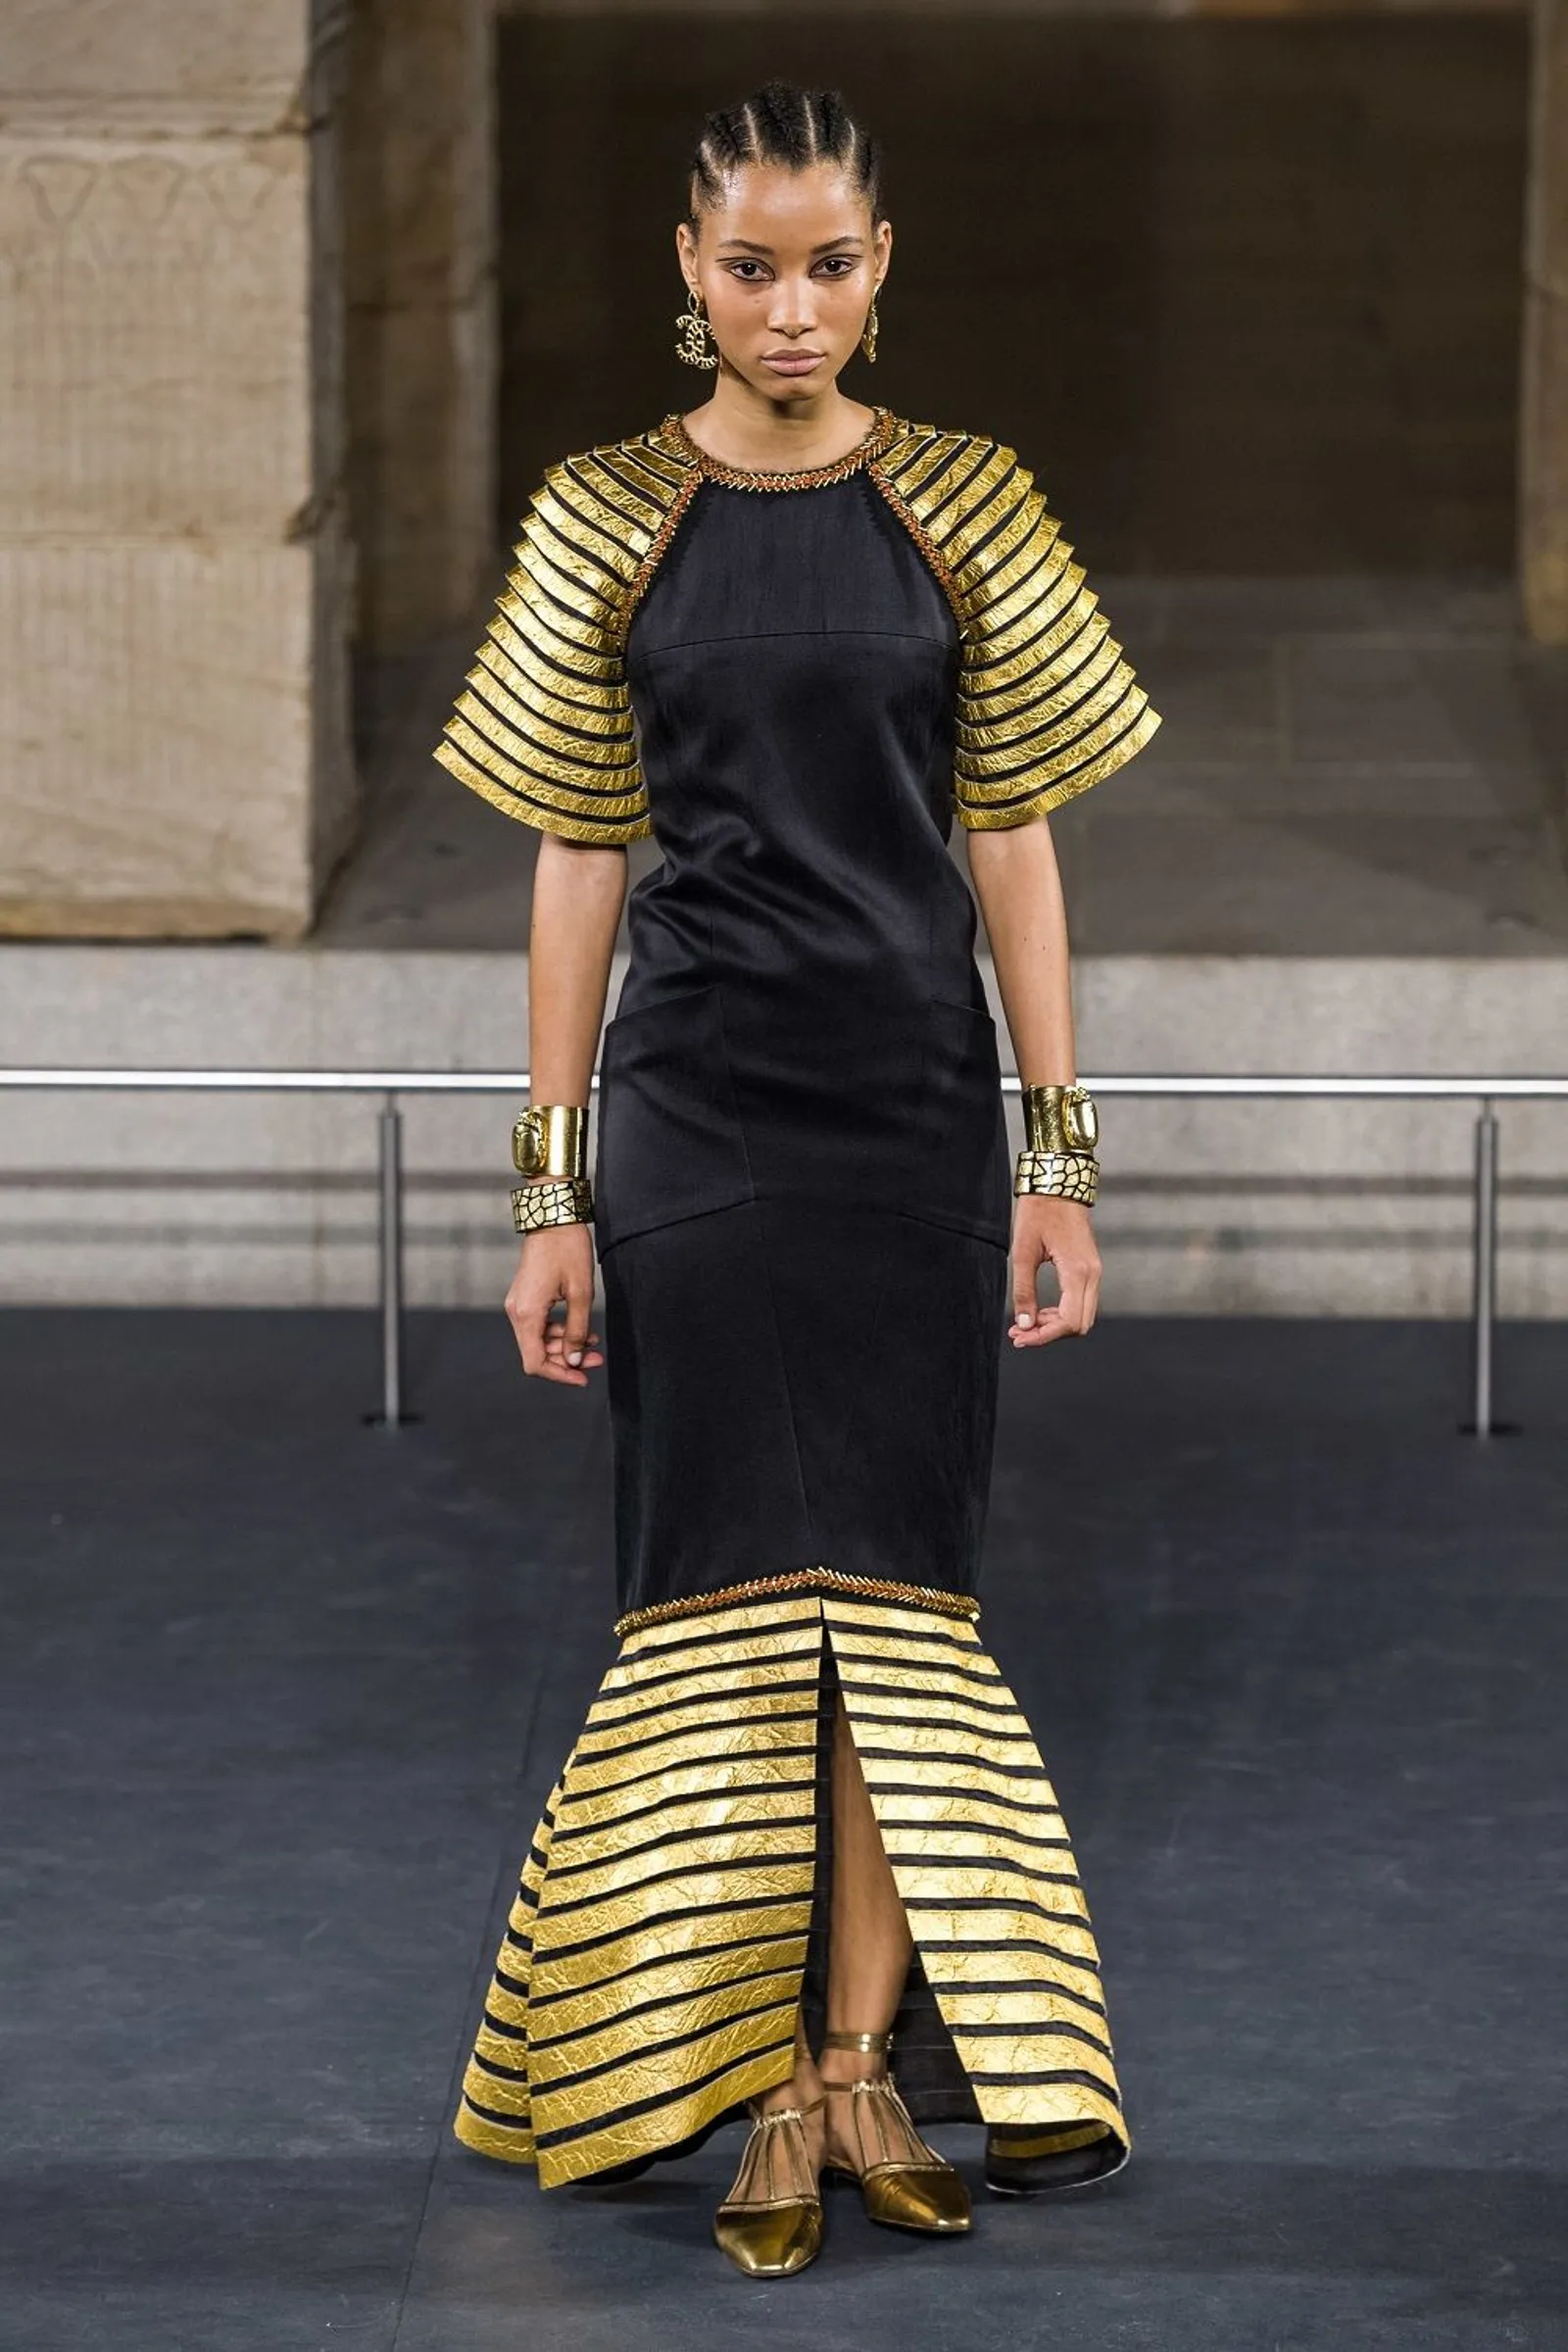 Chanel Membawa 'Egypt' ke New York  Pada Koleksi Pre-Fall 2019